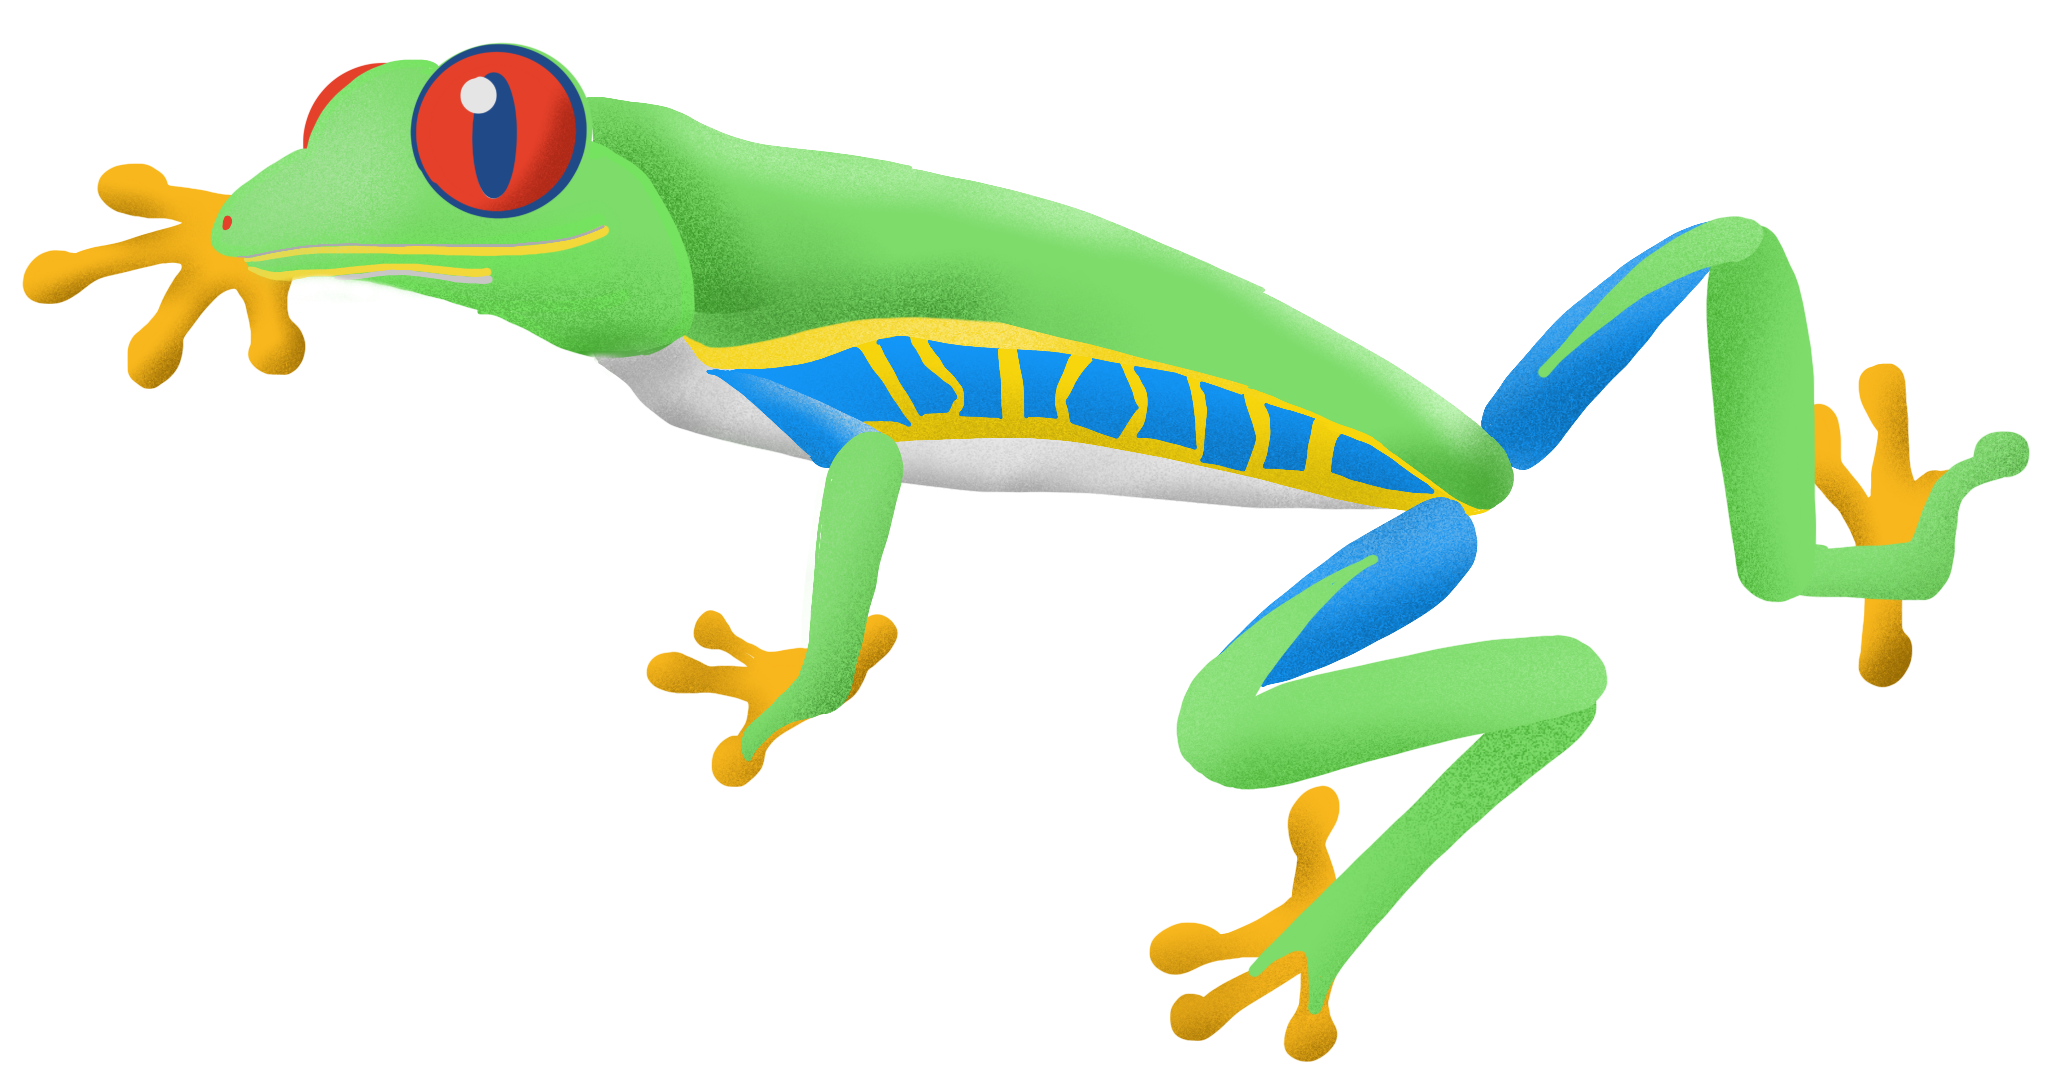 tnf frog logo